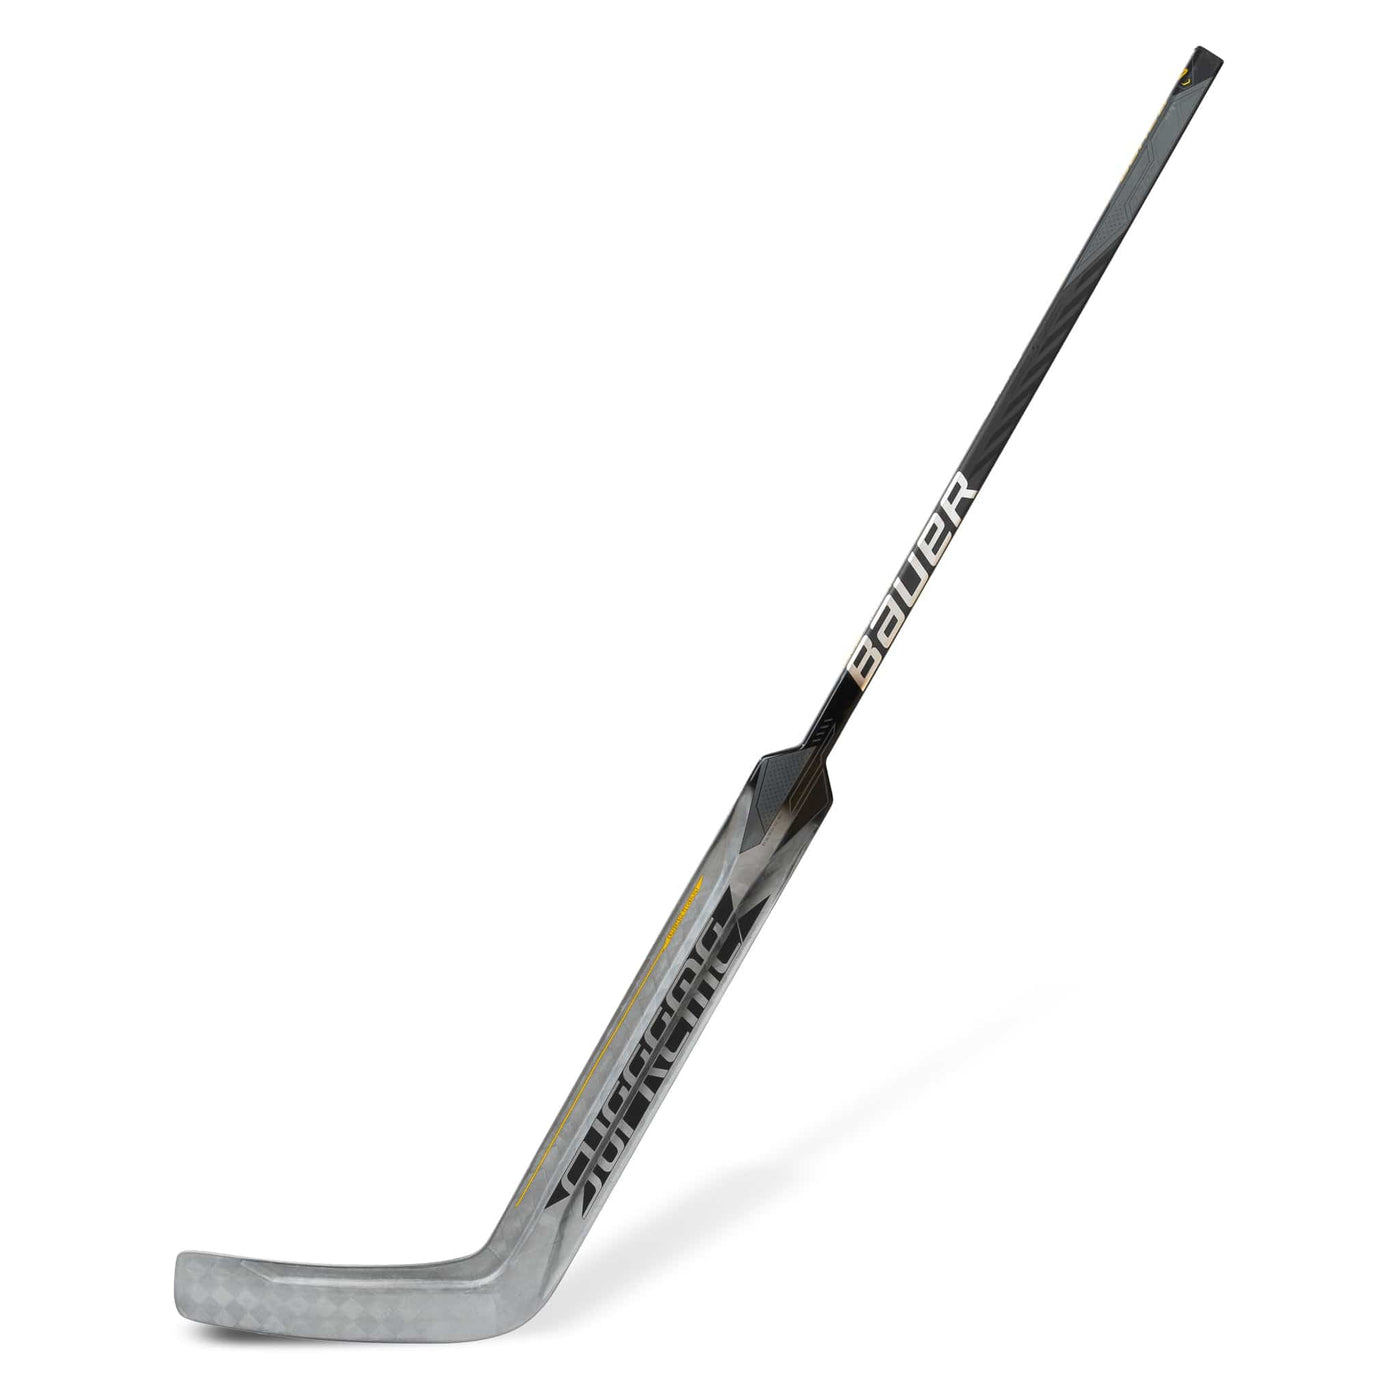 Bauer Supreme Mach Senior Goalie Stick - The Hockey Shop Source For Sports